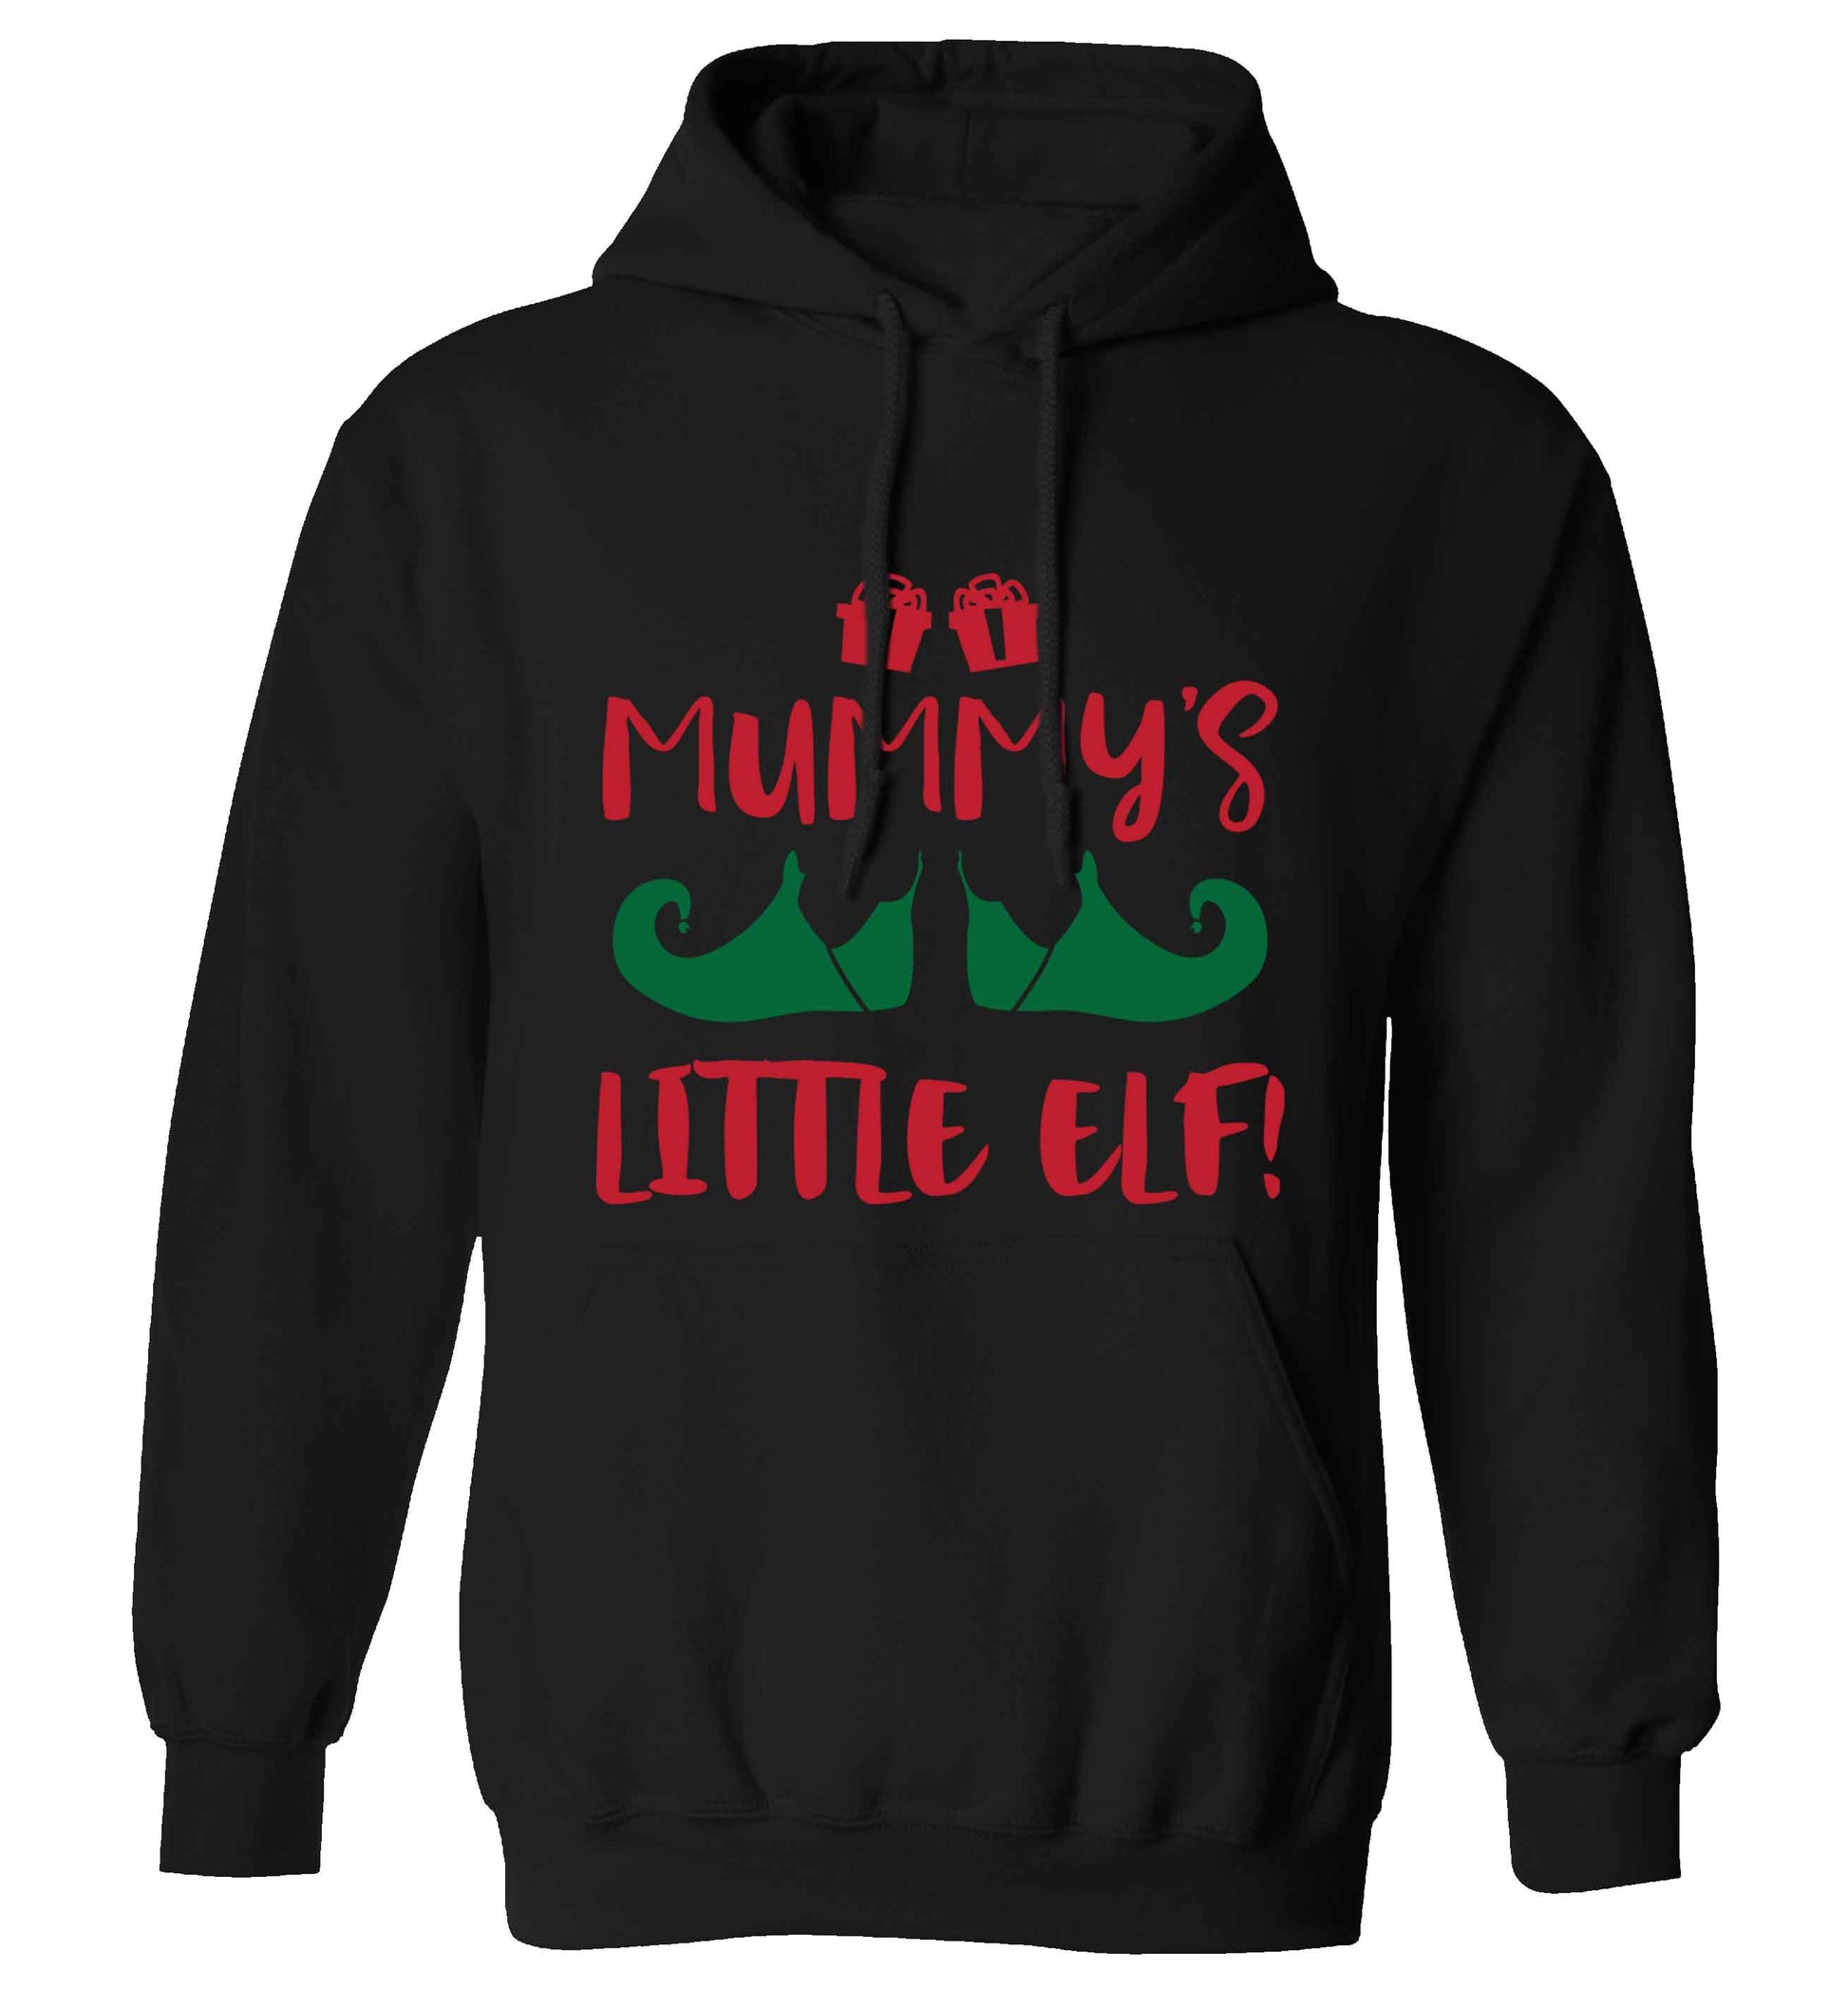 Mummy's little elf adults unisex black hoodie 2XL